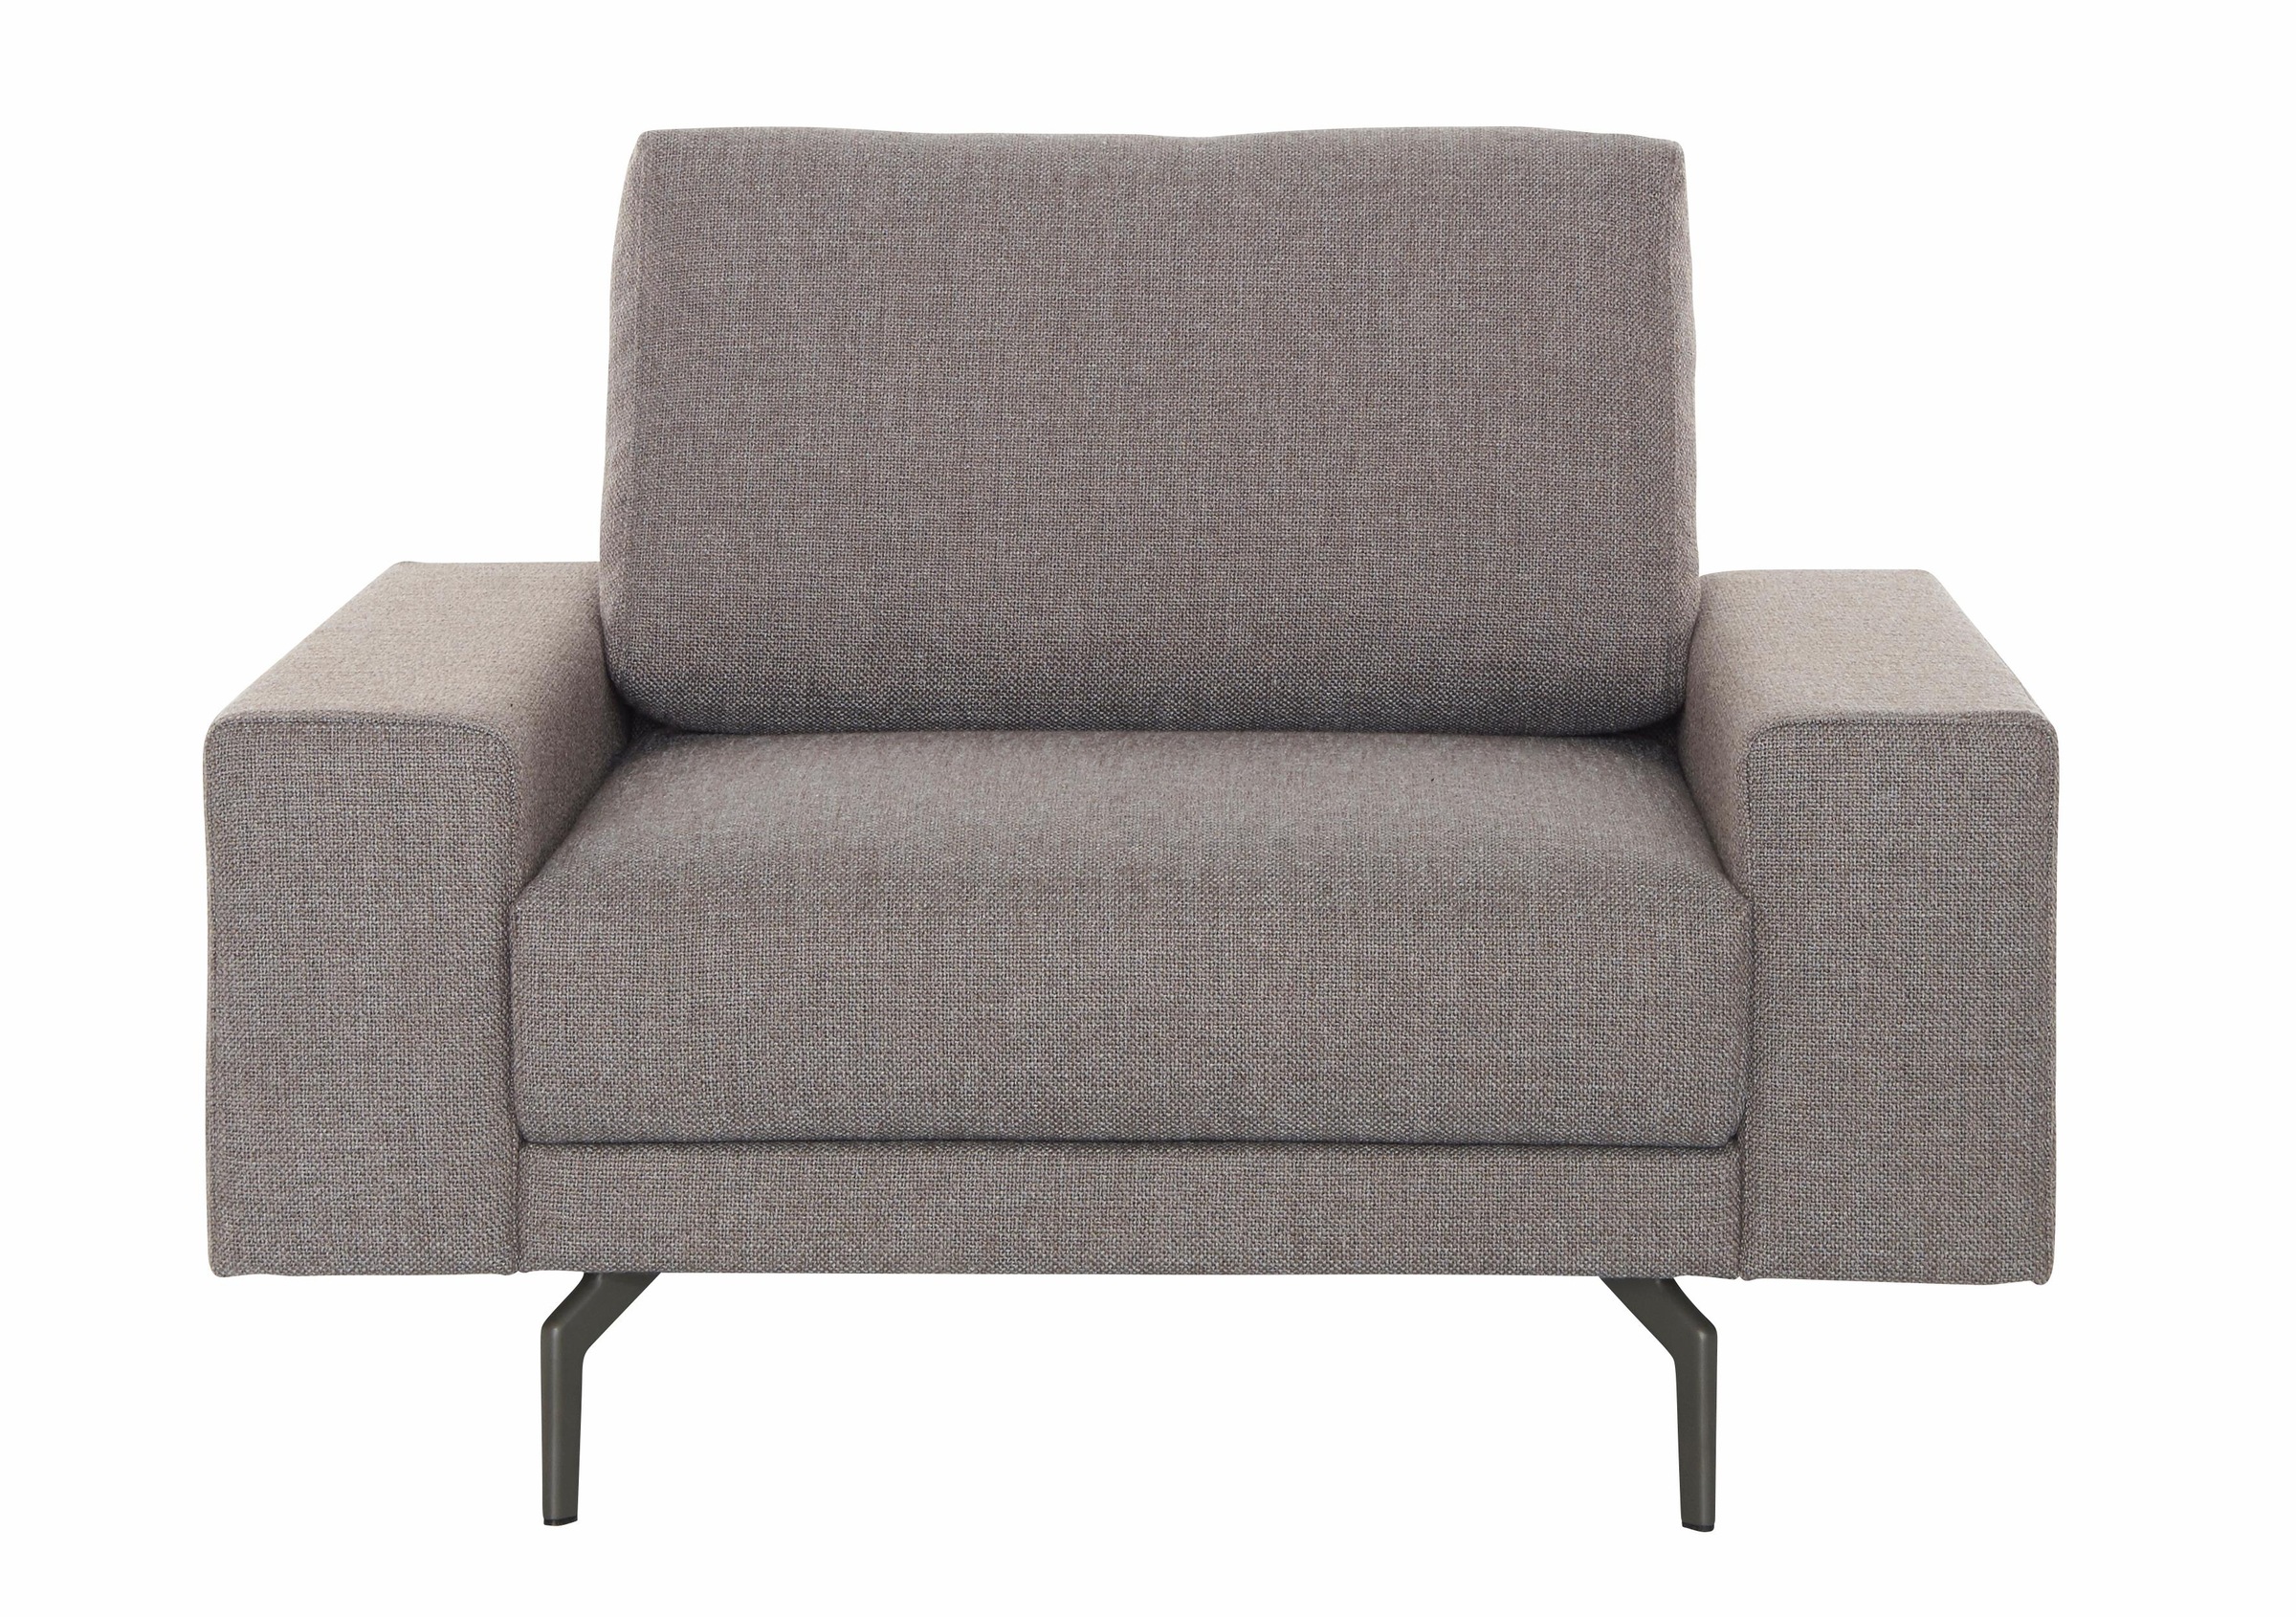 sofa | cm in Sessel Armlehne Alugussfüße umbragrau, niedrig, Breite breit hülsta BAUR »hs.450«, 120